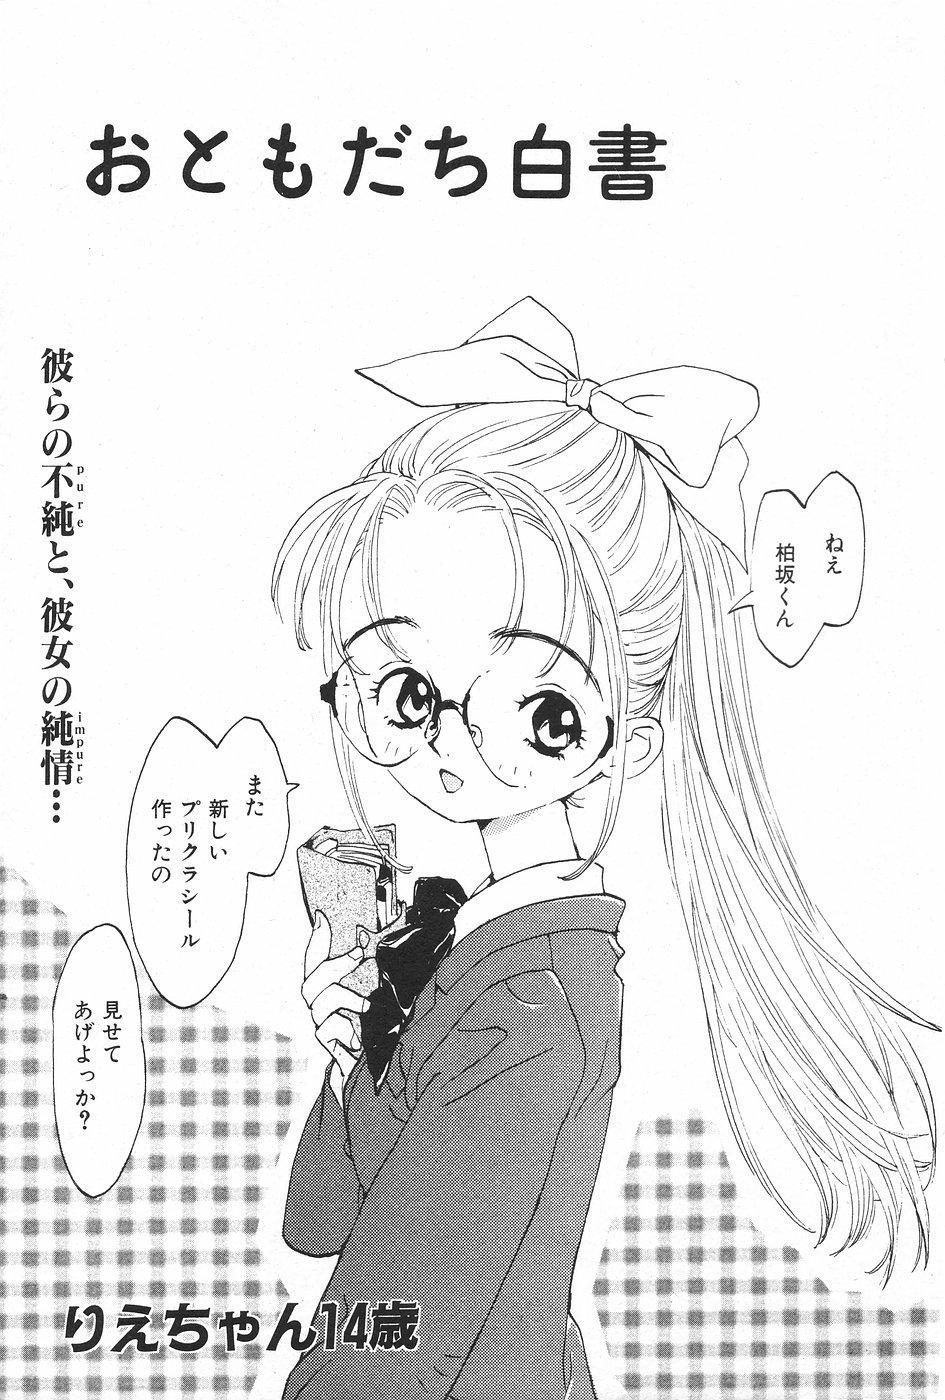 Manga Hotmilk 1997-05 58